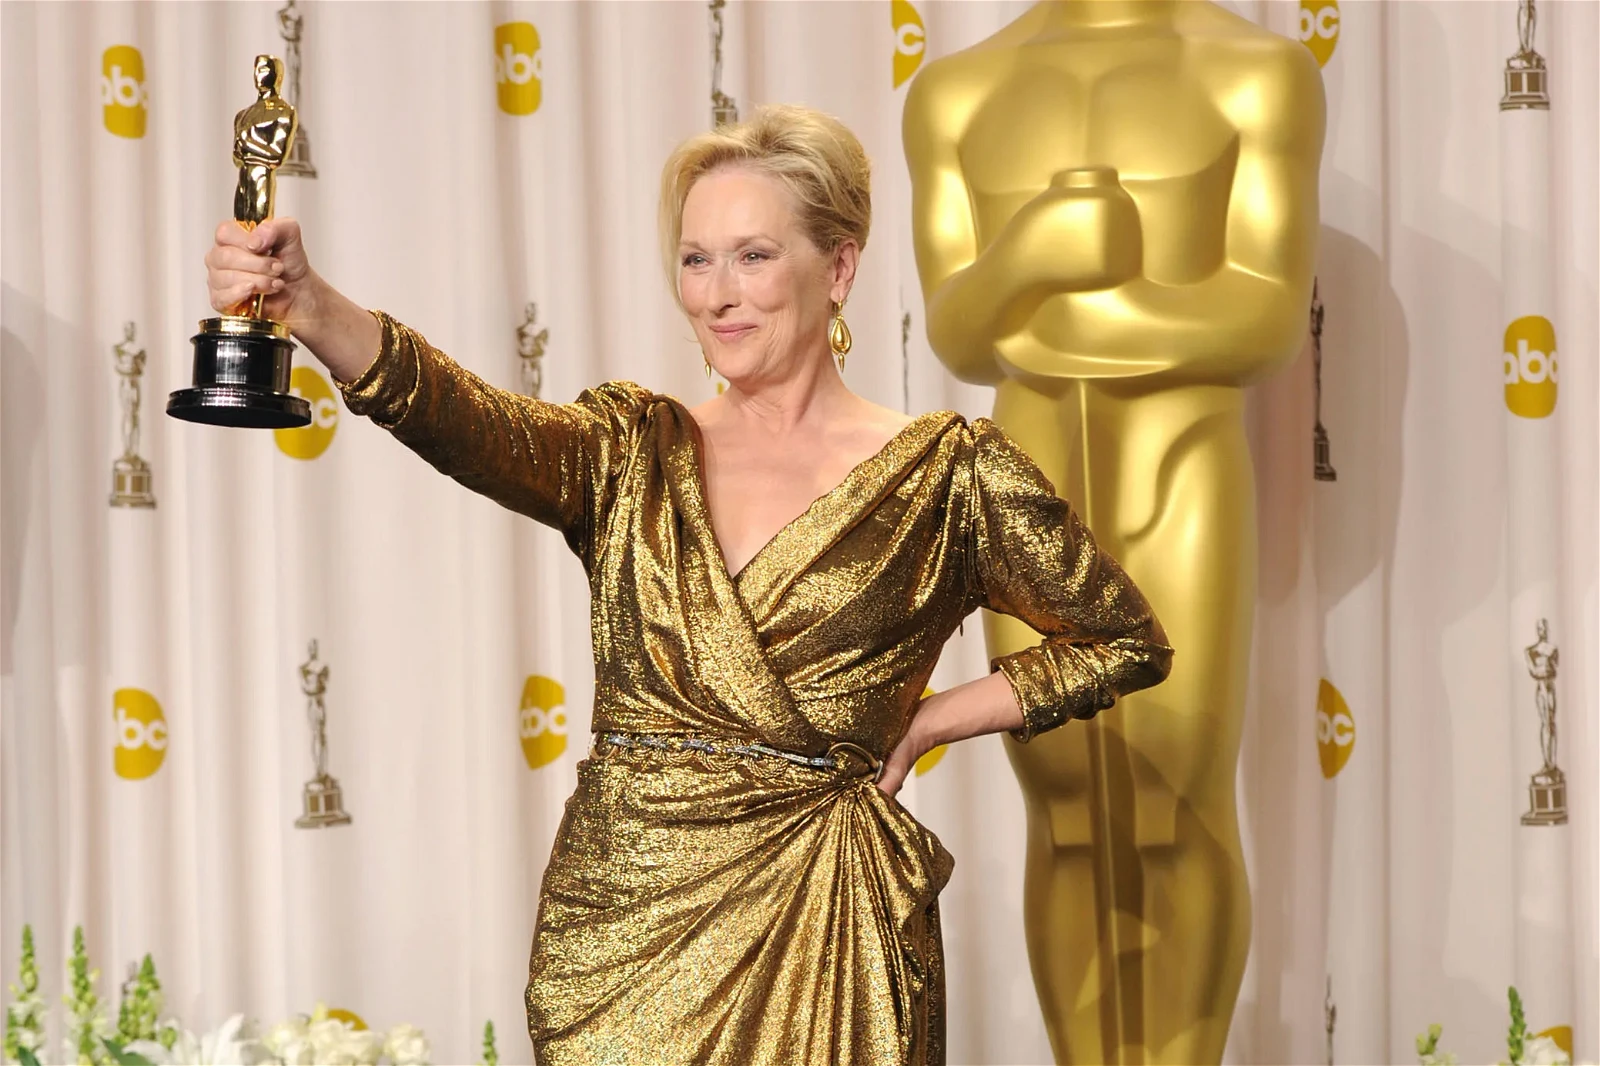 Meryl Streep later went on to win 3 Oscars